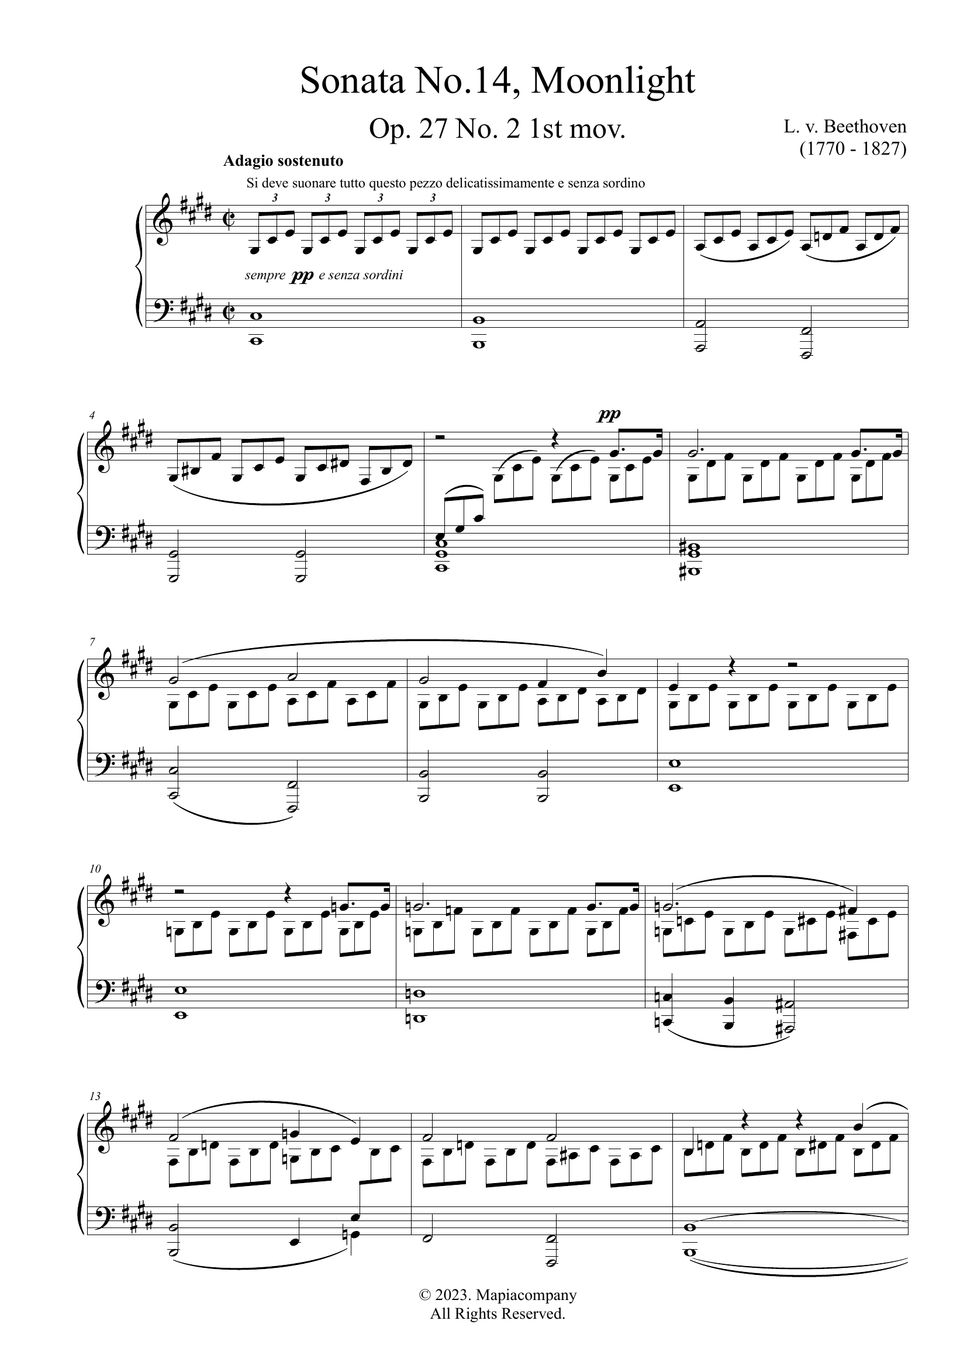 L. v. Beethoven - ベートーヴェン - ピアノソナタ第14番 by ココミュオリジナル